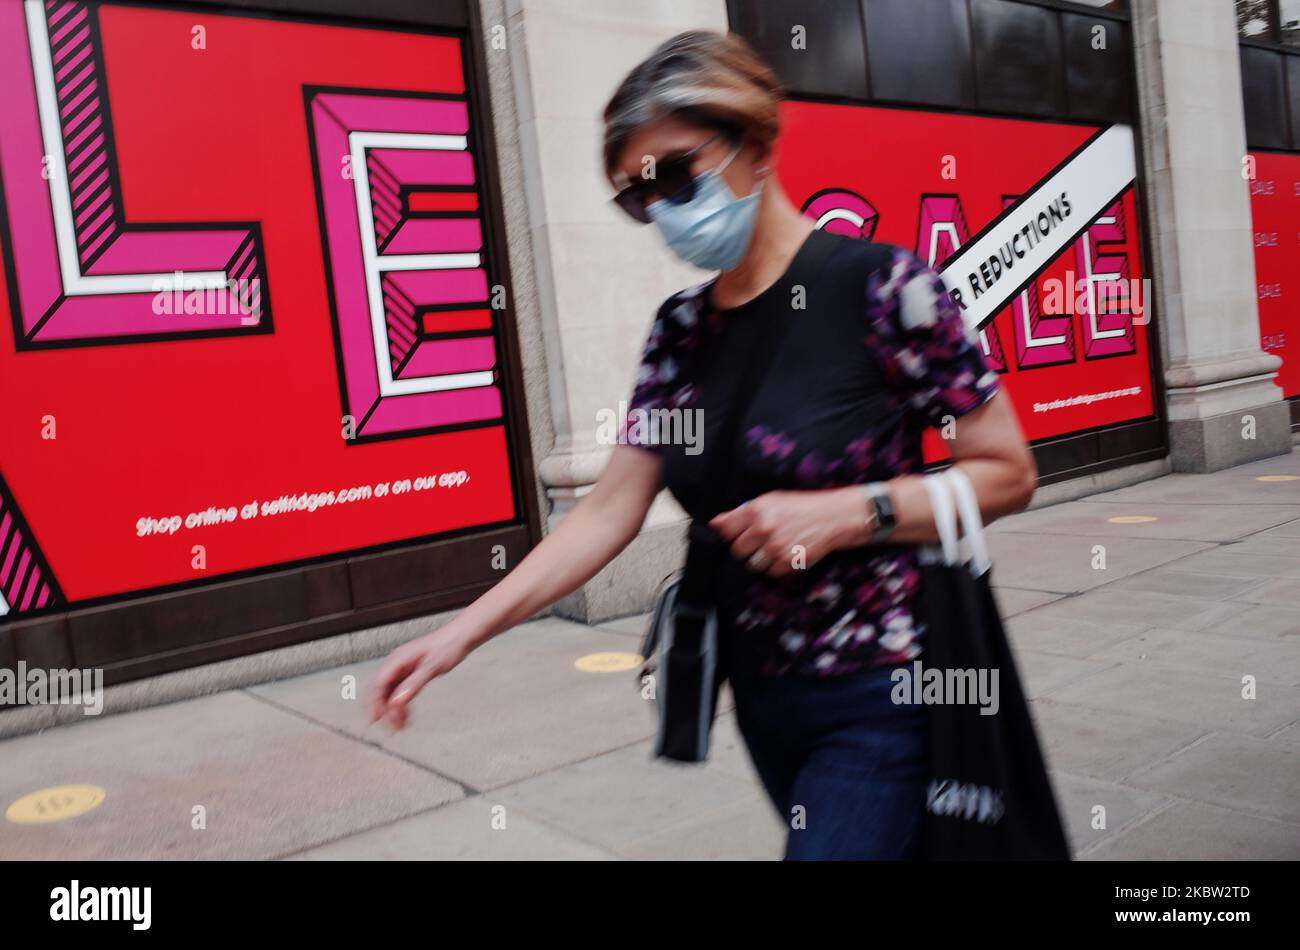 A woman walks past the Louis Vuitton shop in the Suria KLCC